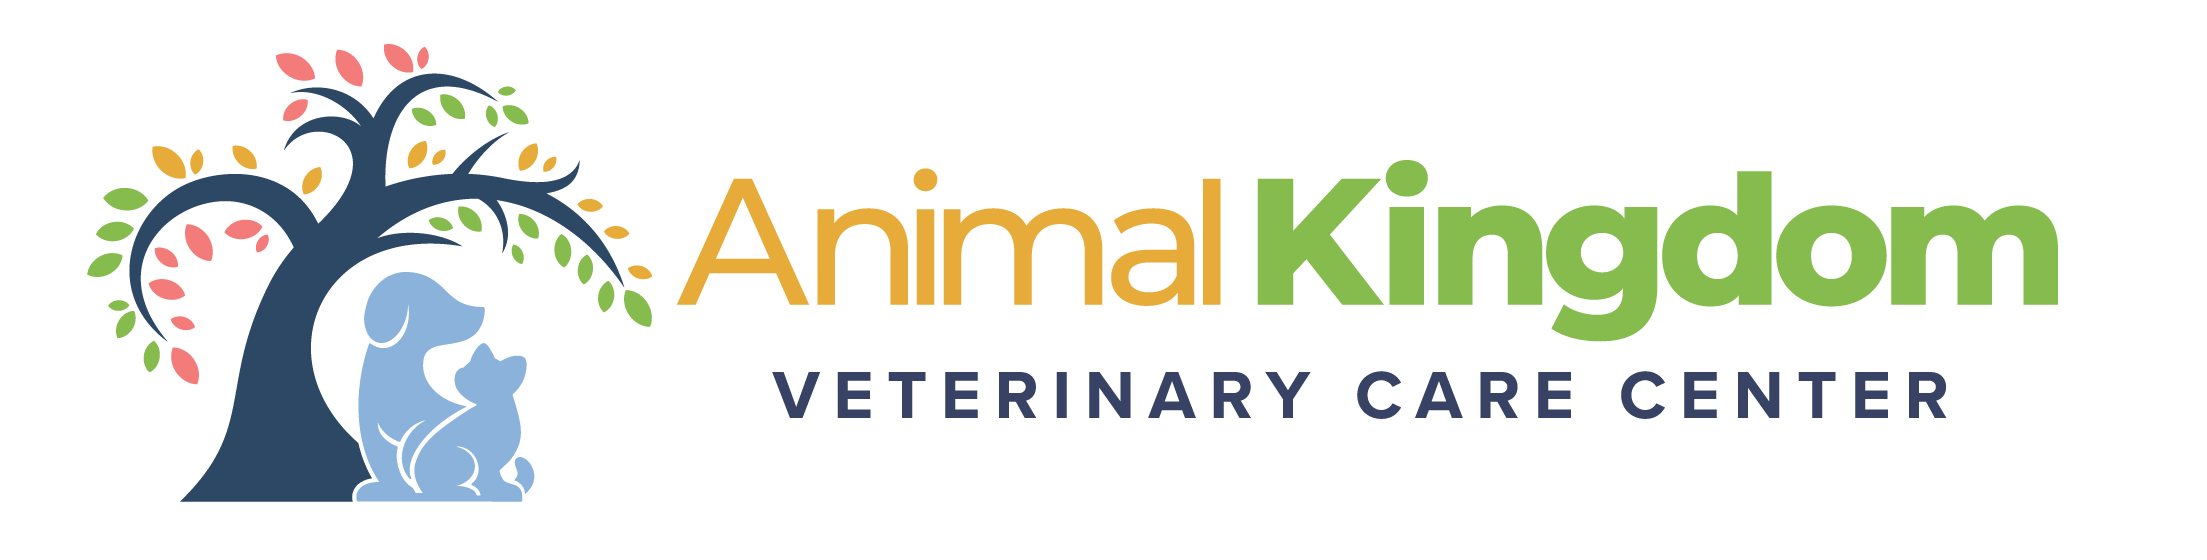 Animal Kingdom Veterinary Care Center